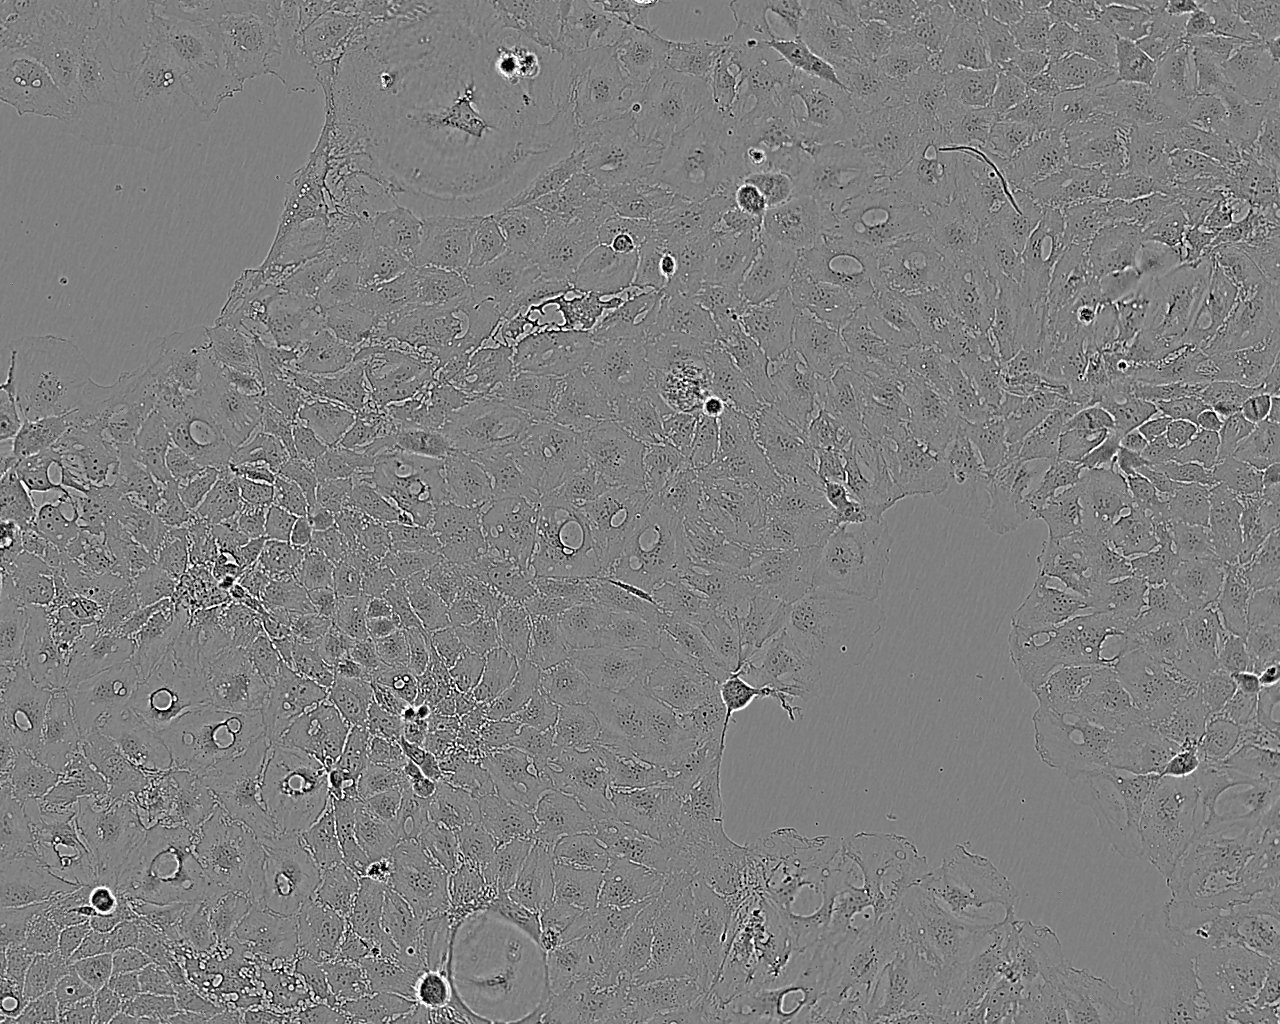 TK-10 epithelioid cells人肾癌细胞系